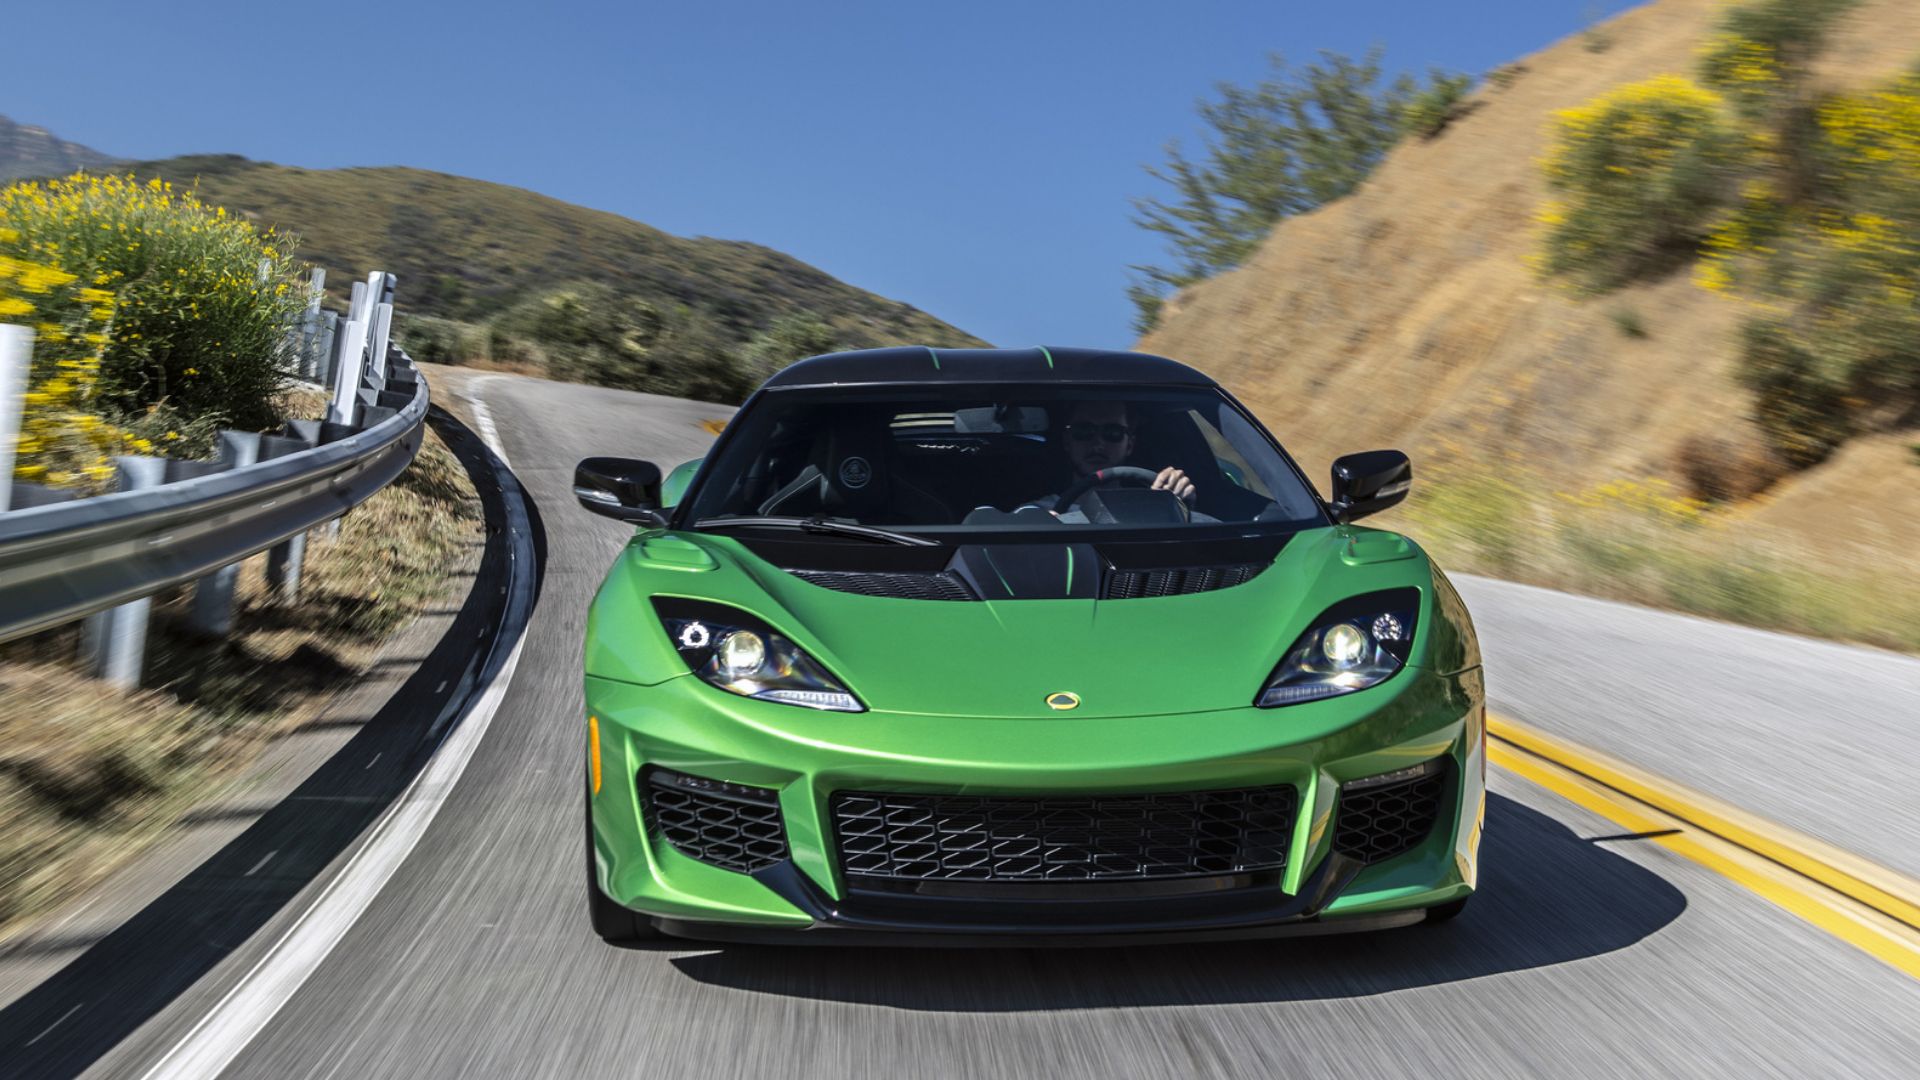 2020 Lotus Evora GT in green posing on mountain road